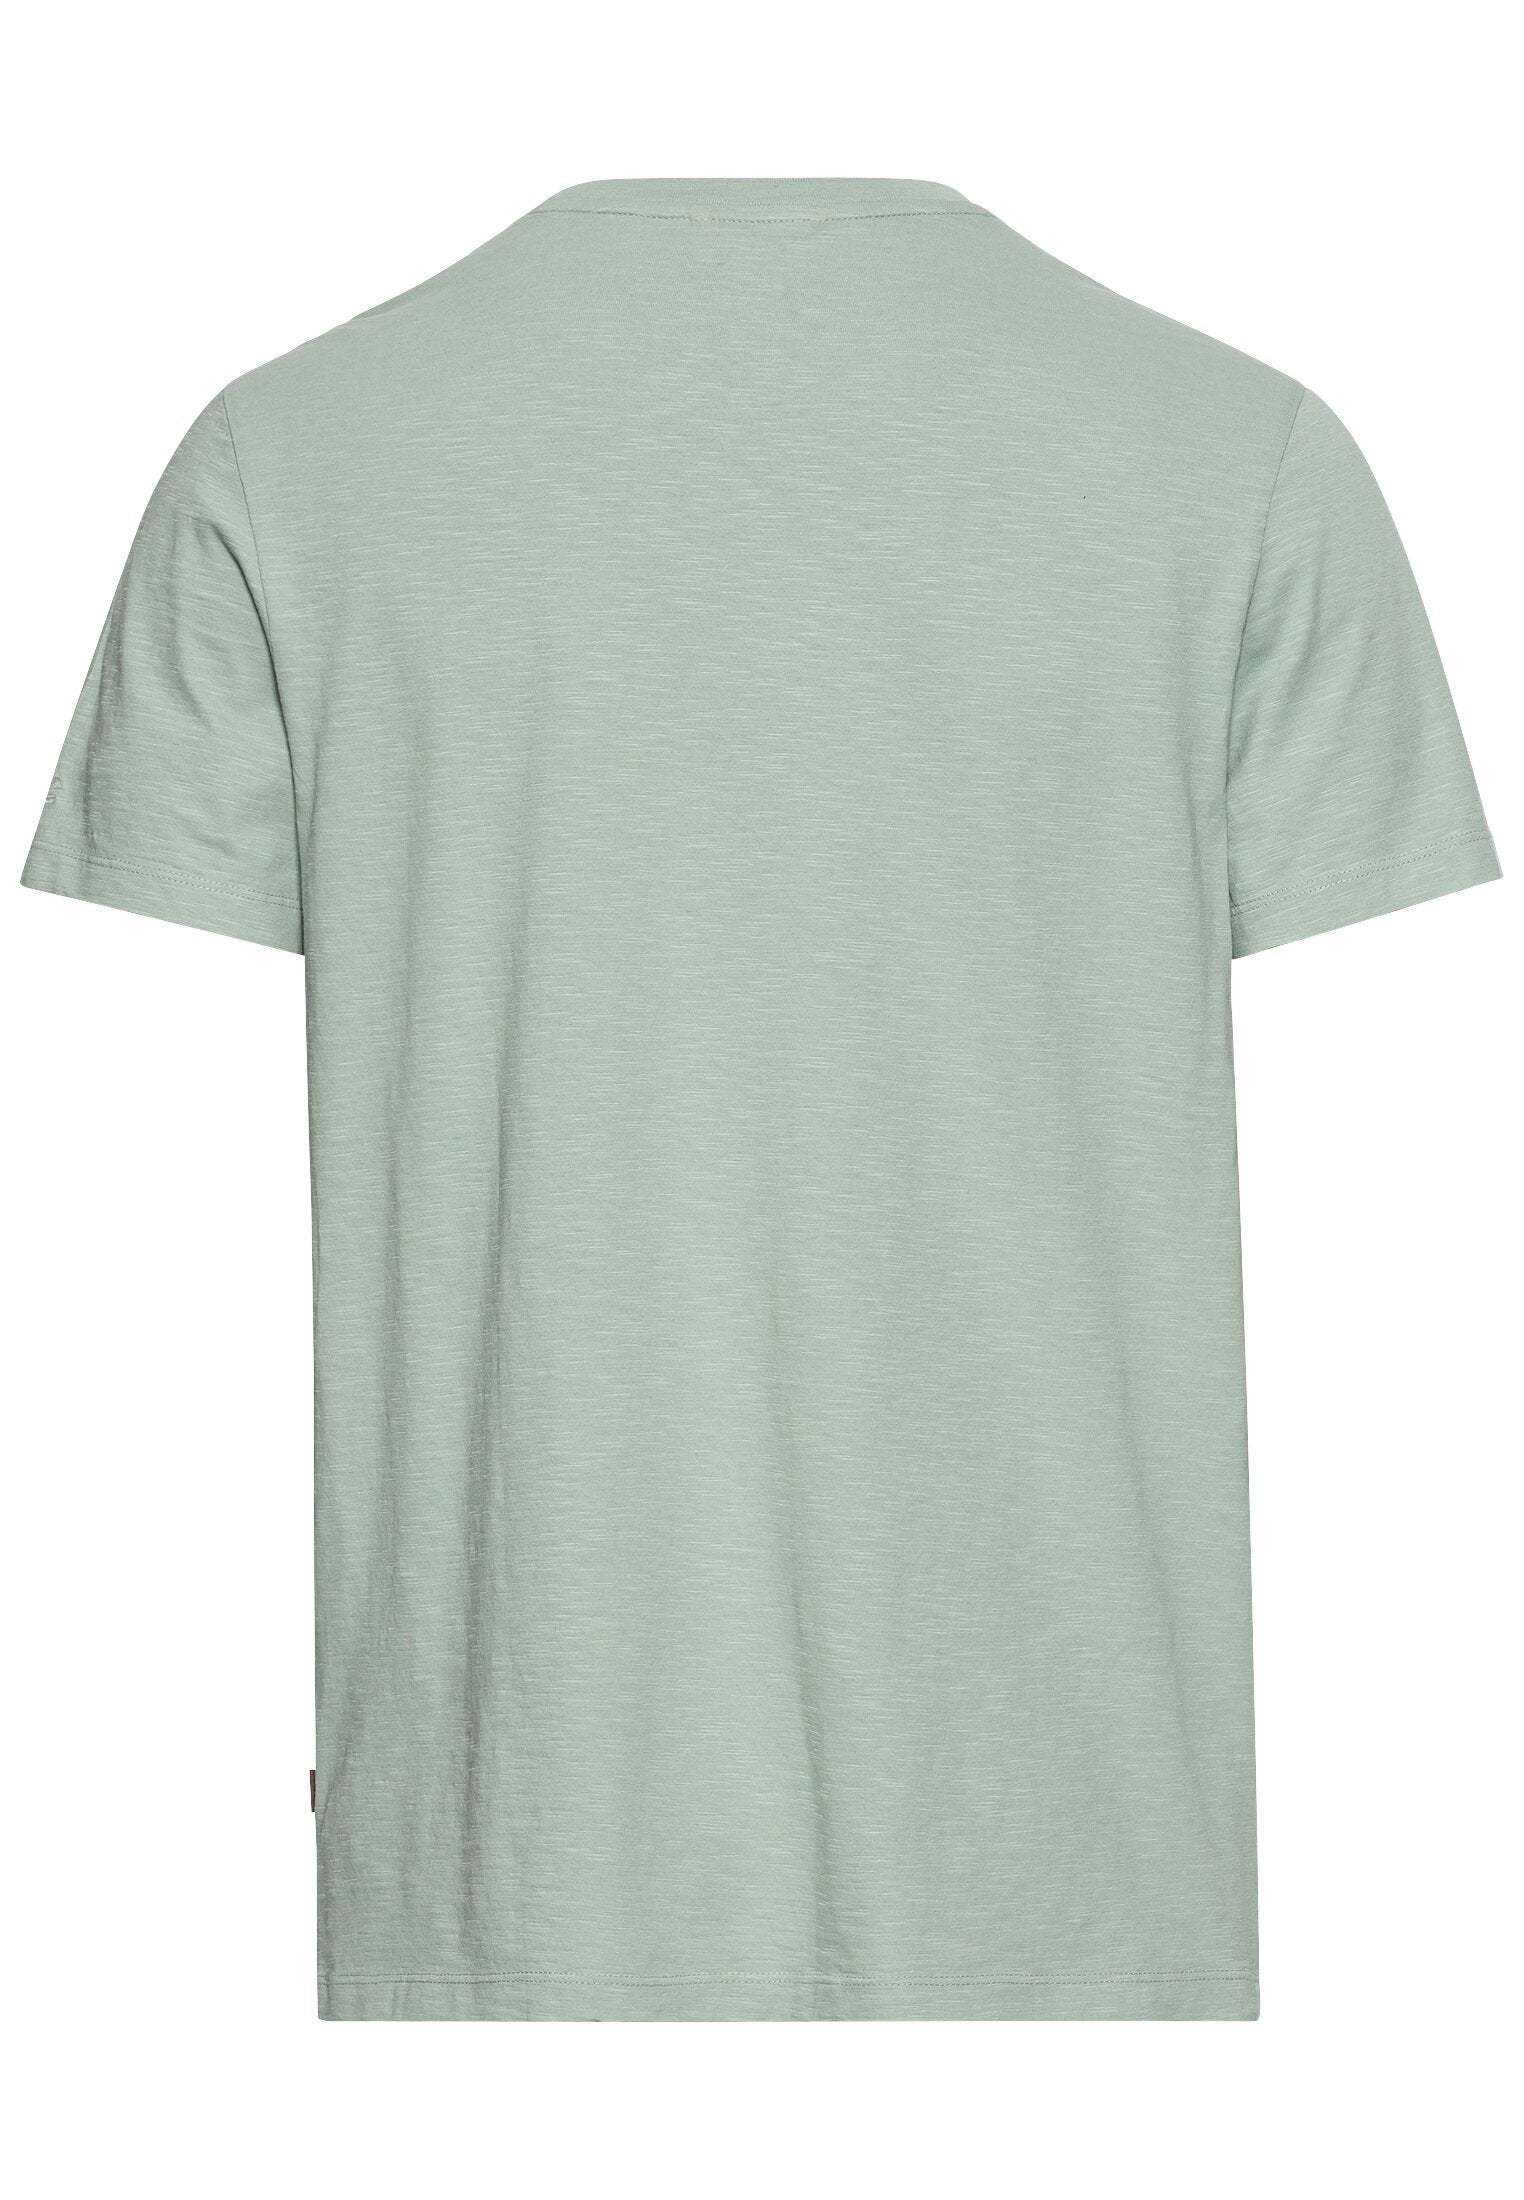 T-Shirt mit Print aus nachhaltigem Organic Cotton (Aqua Green)